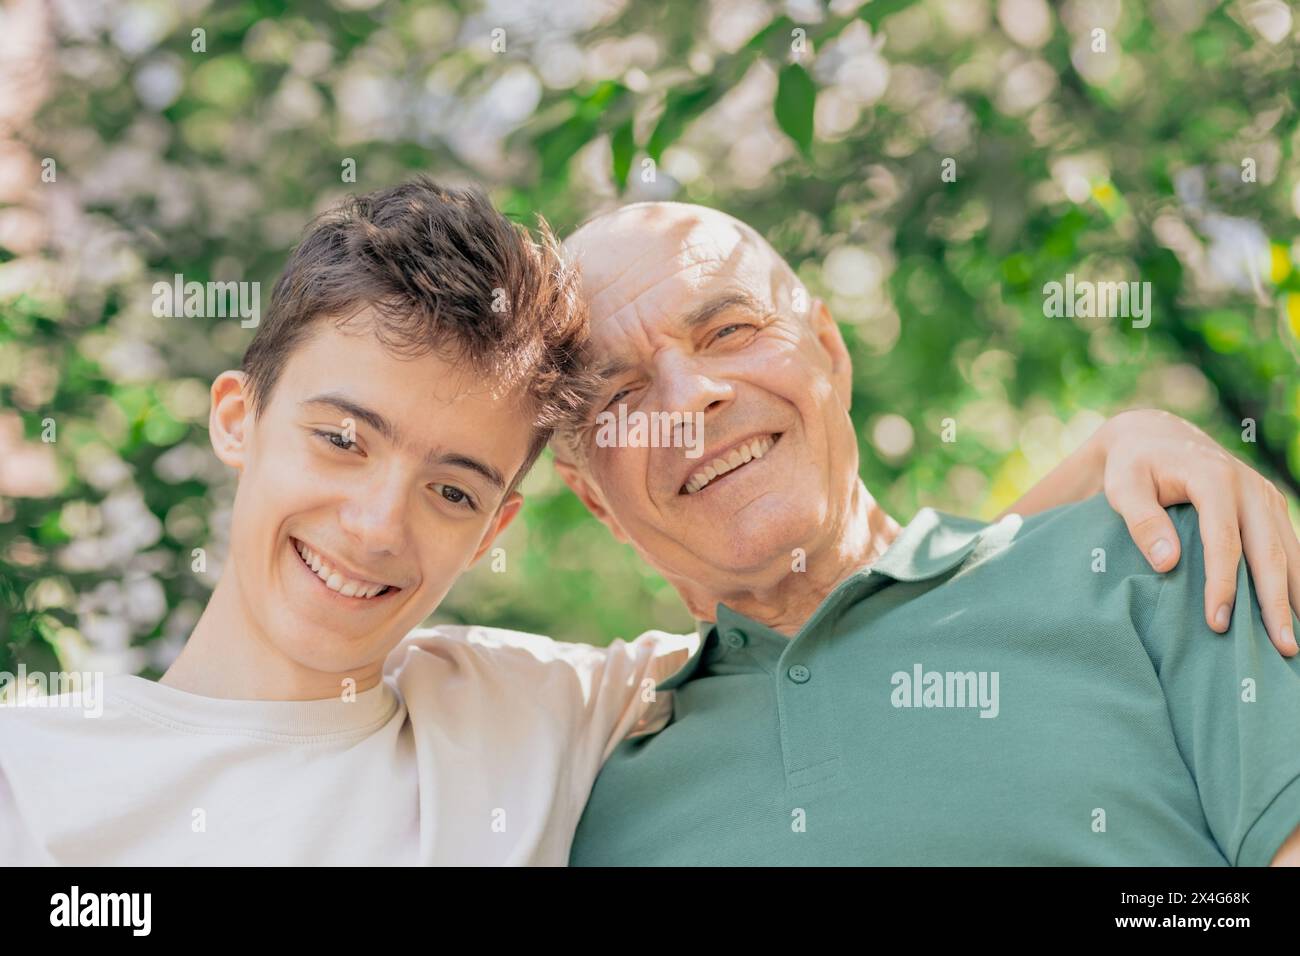 Portrait of senior man with his grandson Stock Photo